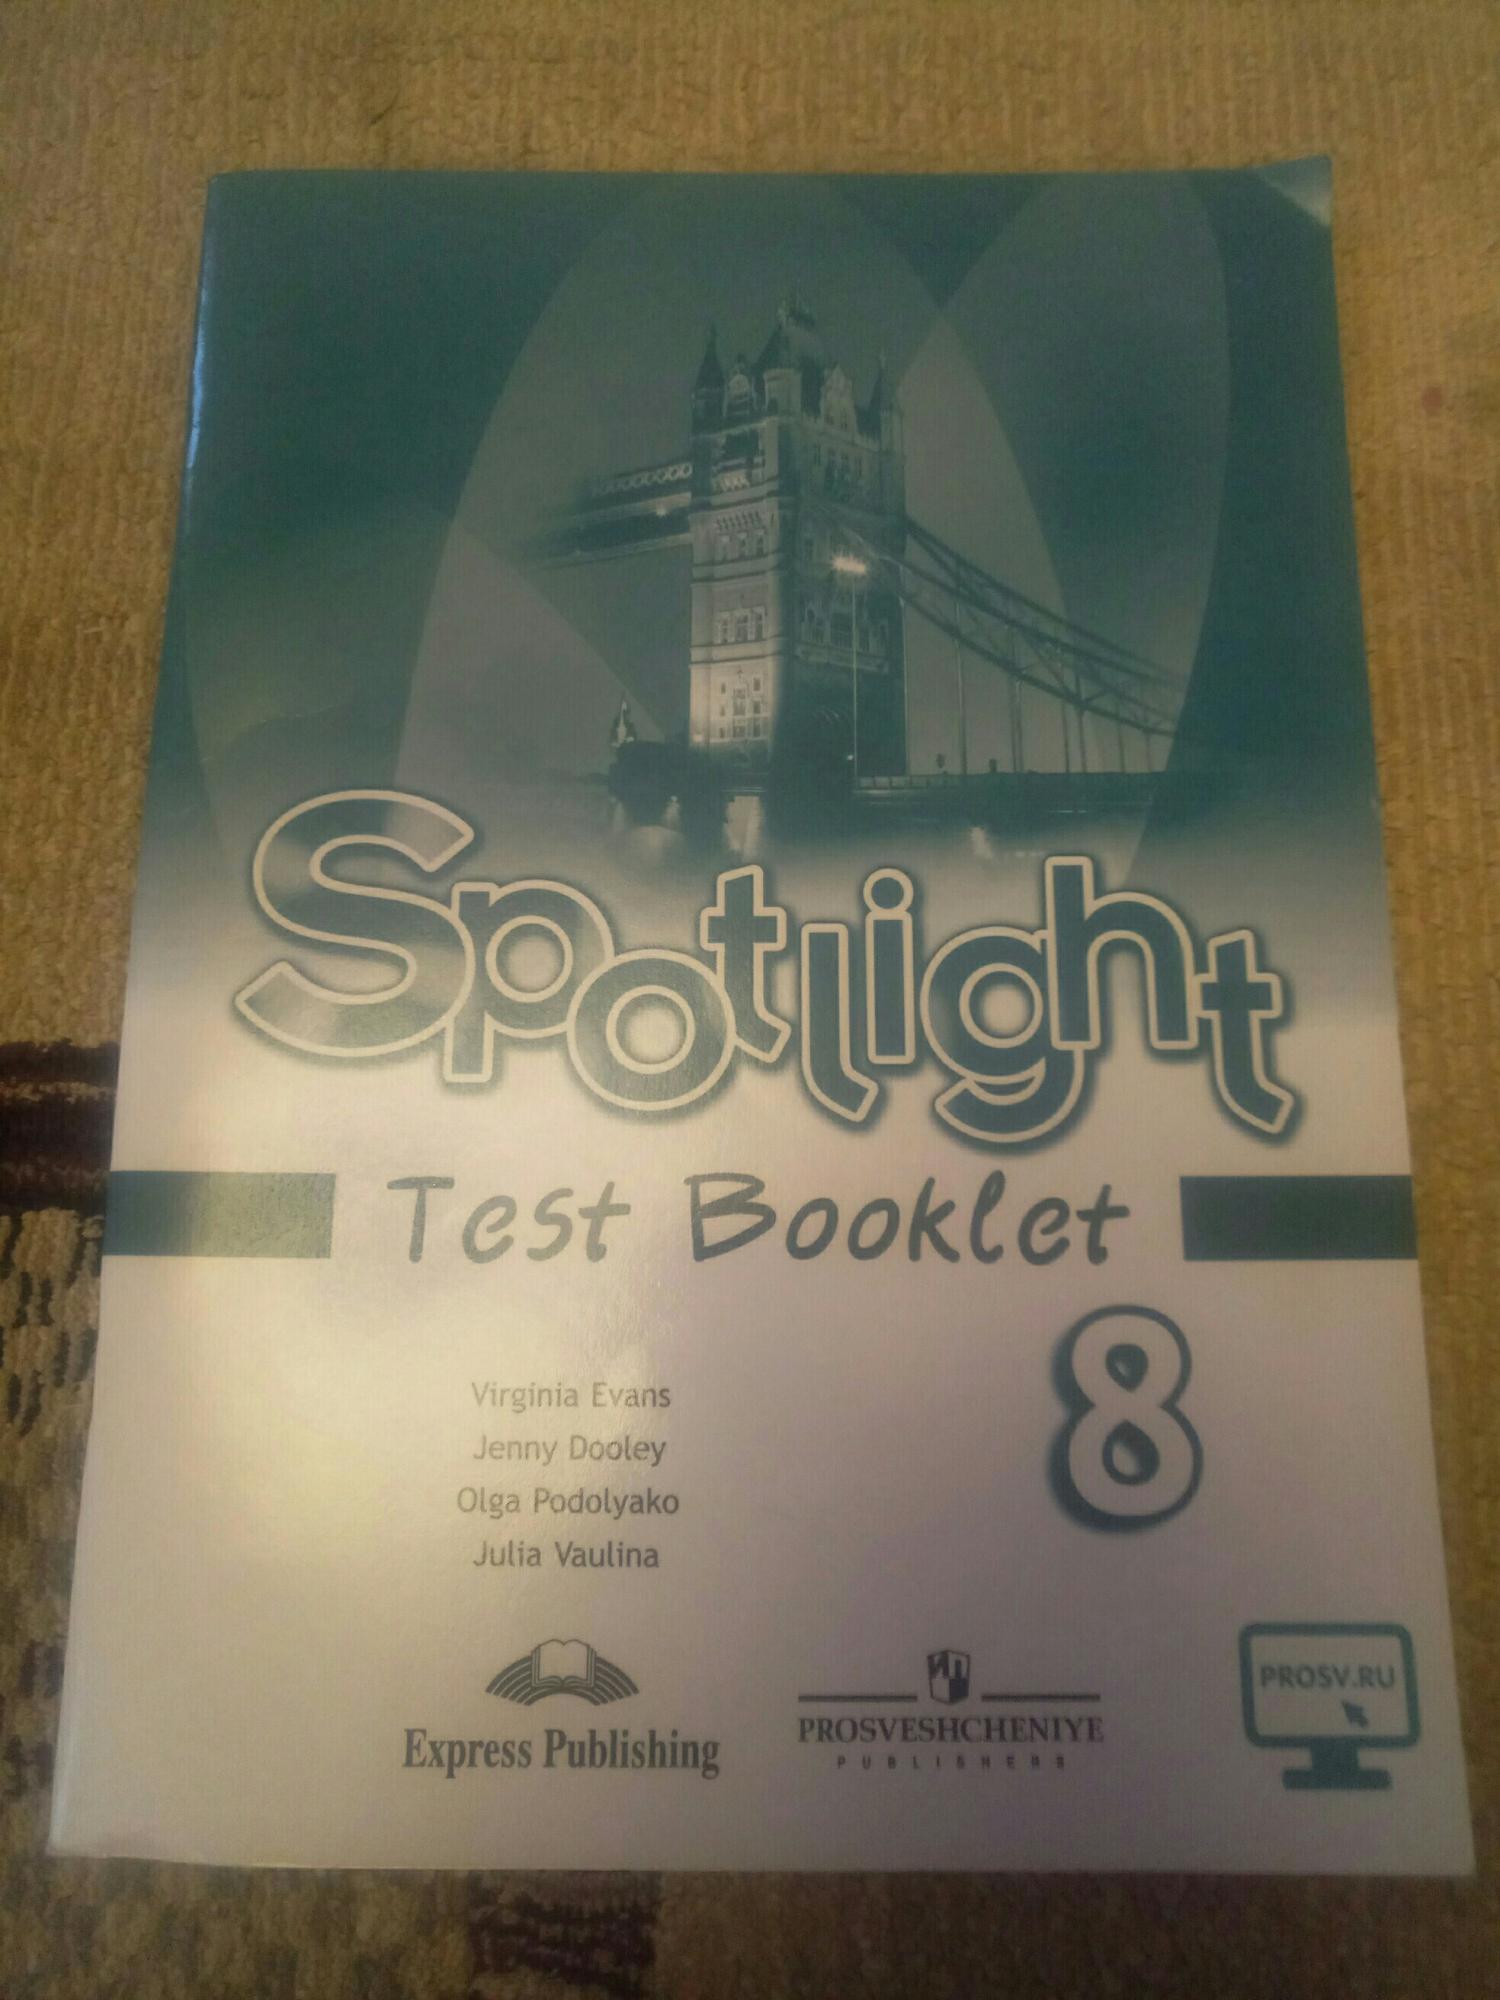 Тест по английскому 8а. Test booklet 9 класс Spotlight ваулина 6. Тест буклет 8 класс Spotlight ваулина. Test booklet 8 класс Spotlight 8а. Spotlight 8 класс Test booklet ключи.